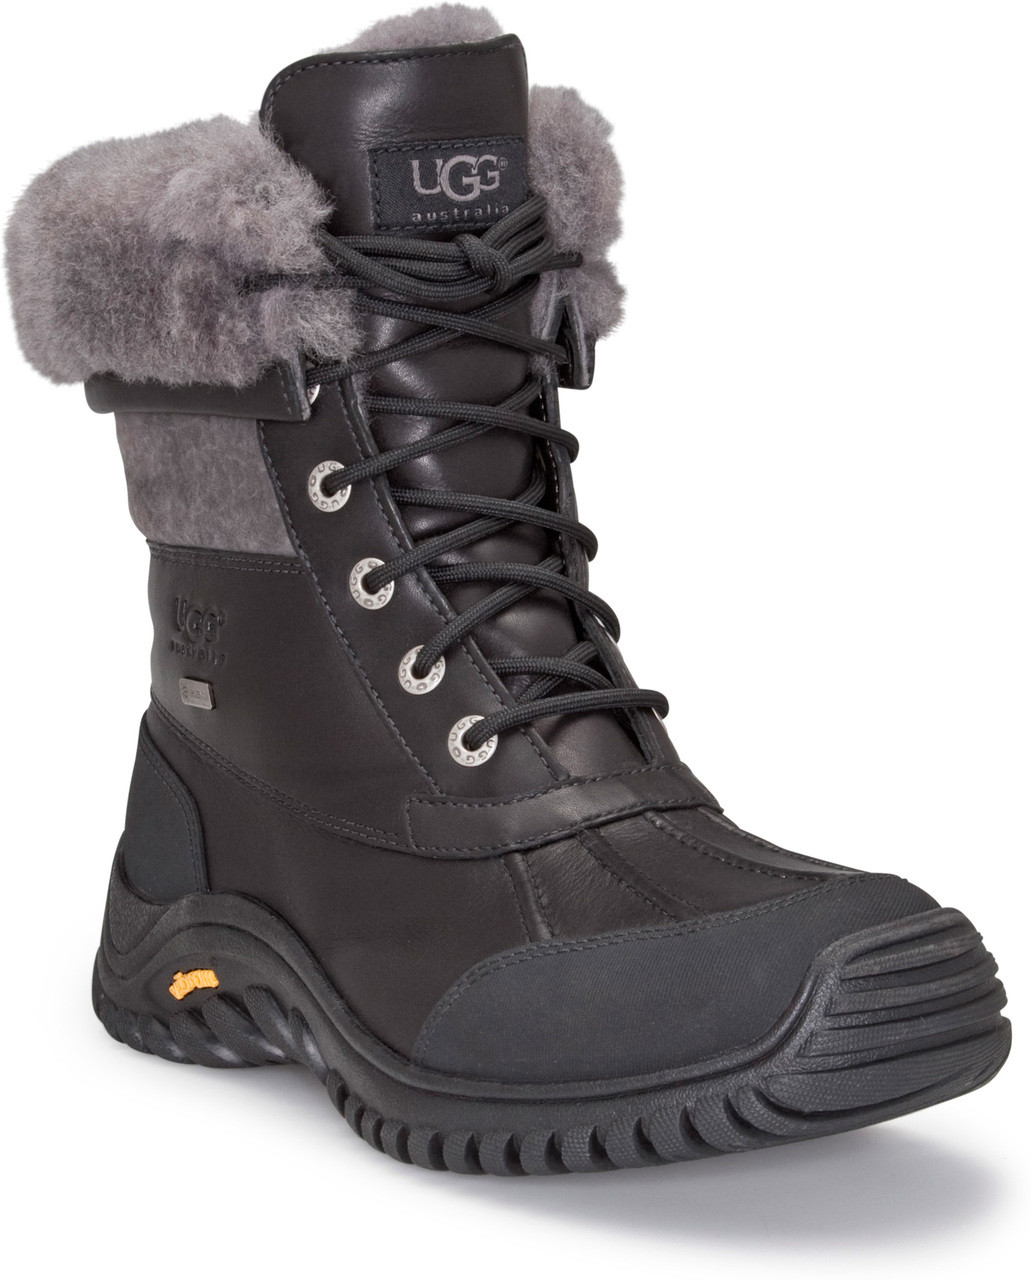 grey adirondack ugg boots